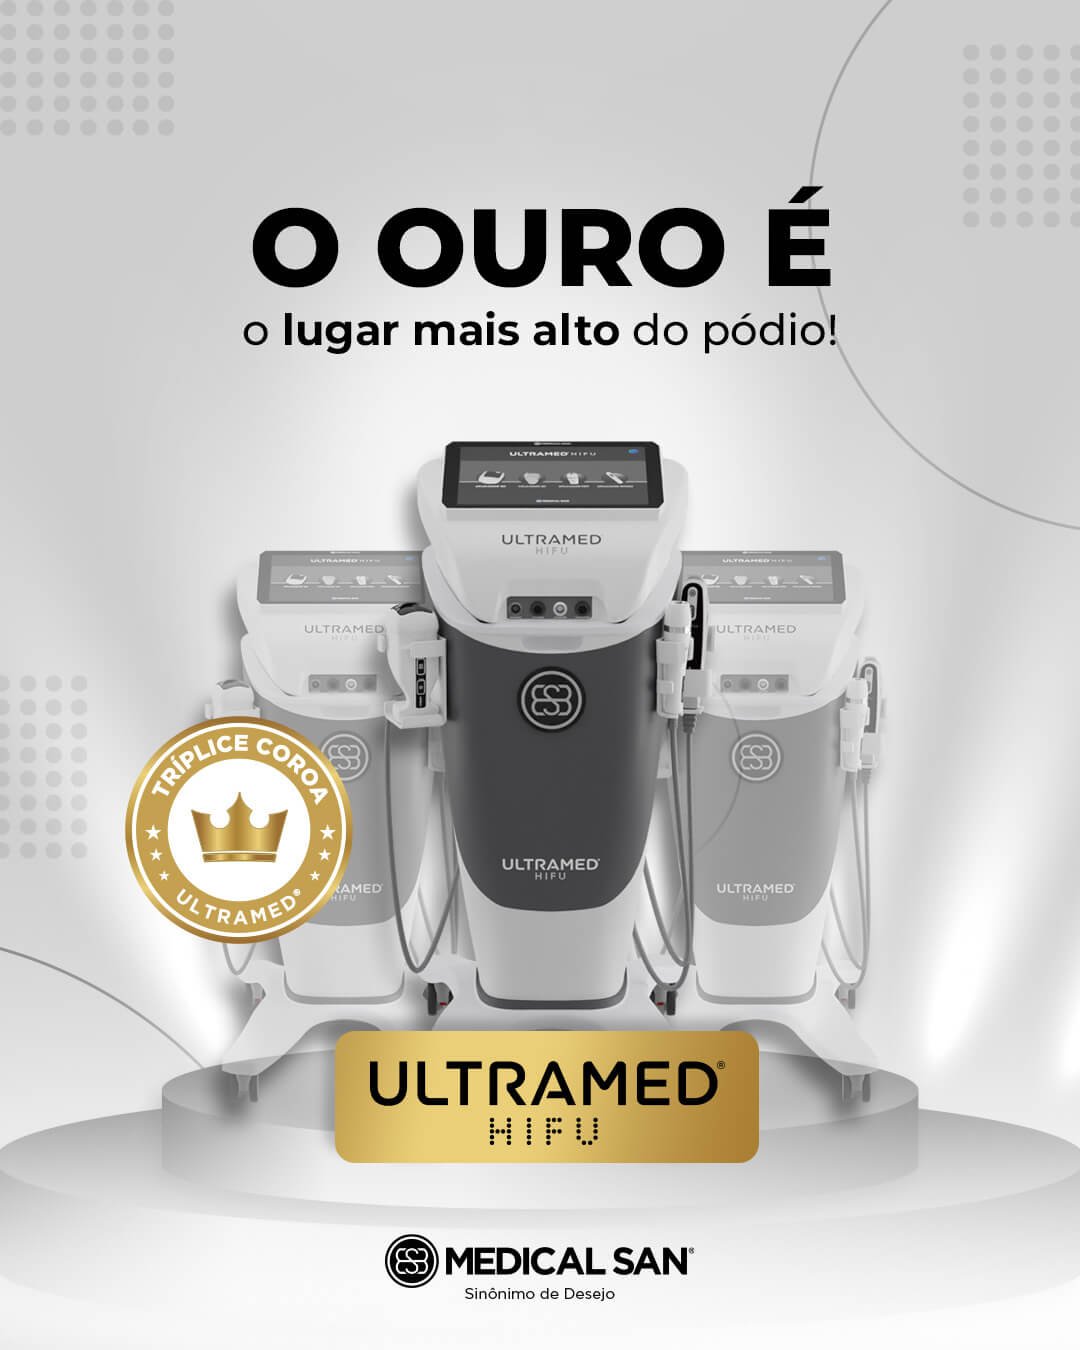 Novo Ultramed HIFU Medical San – Ultrassom Micro e Macrofocado